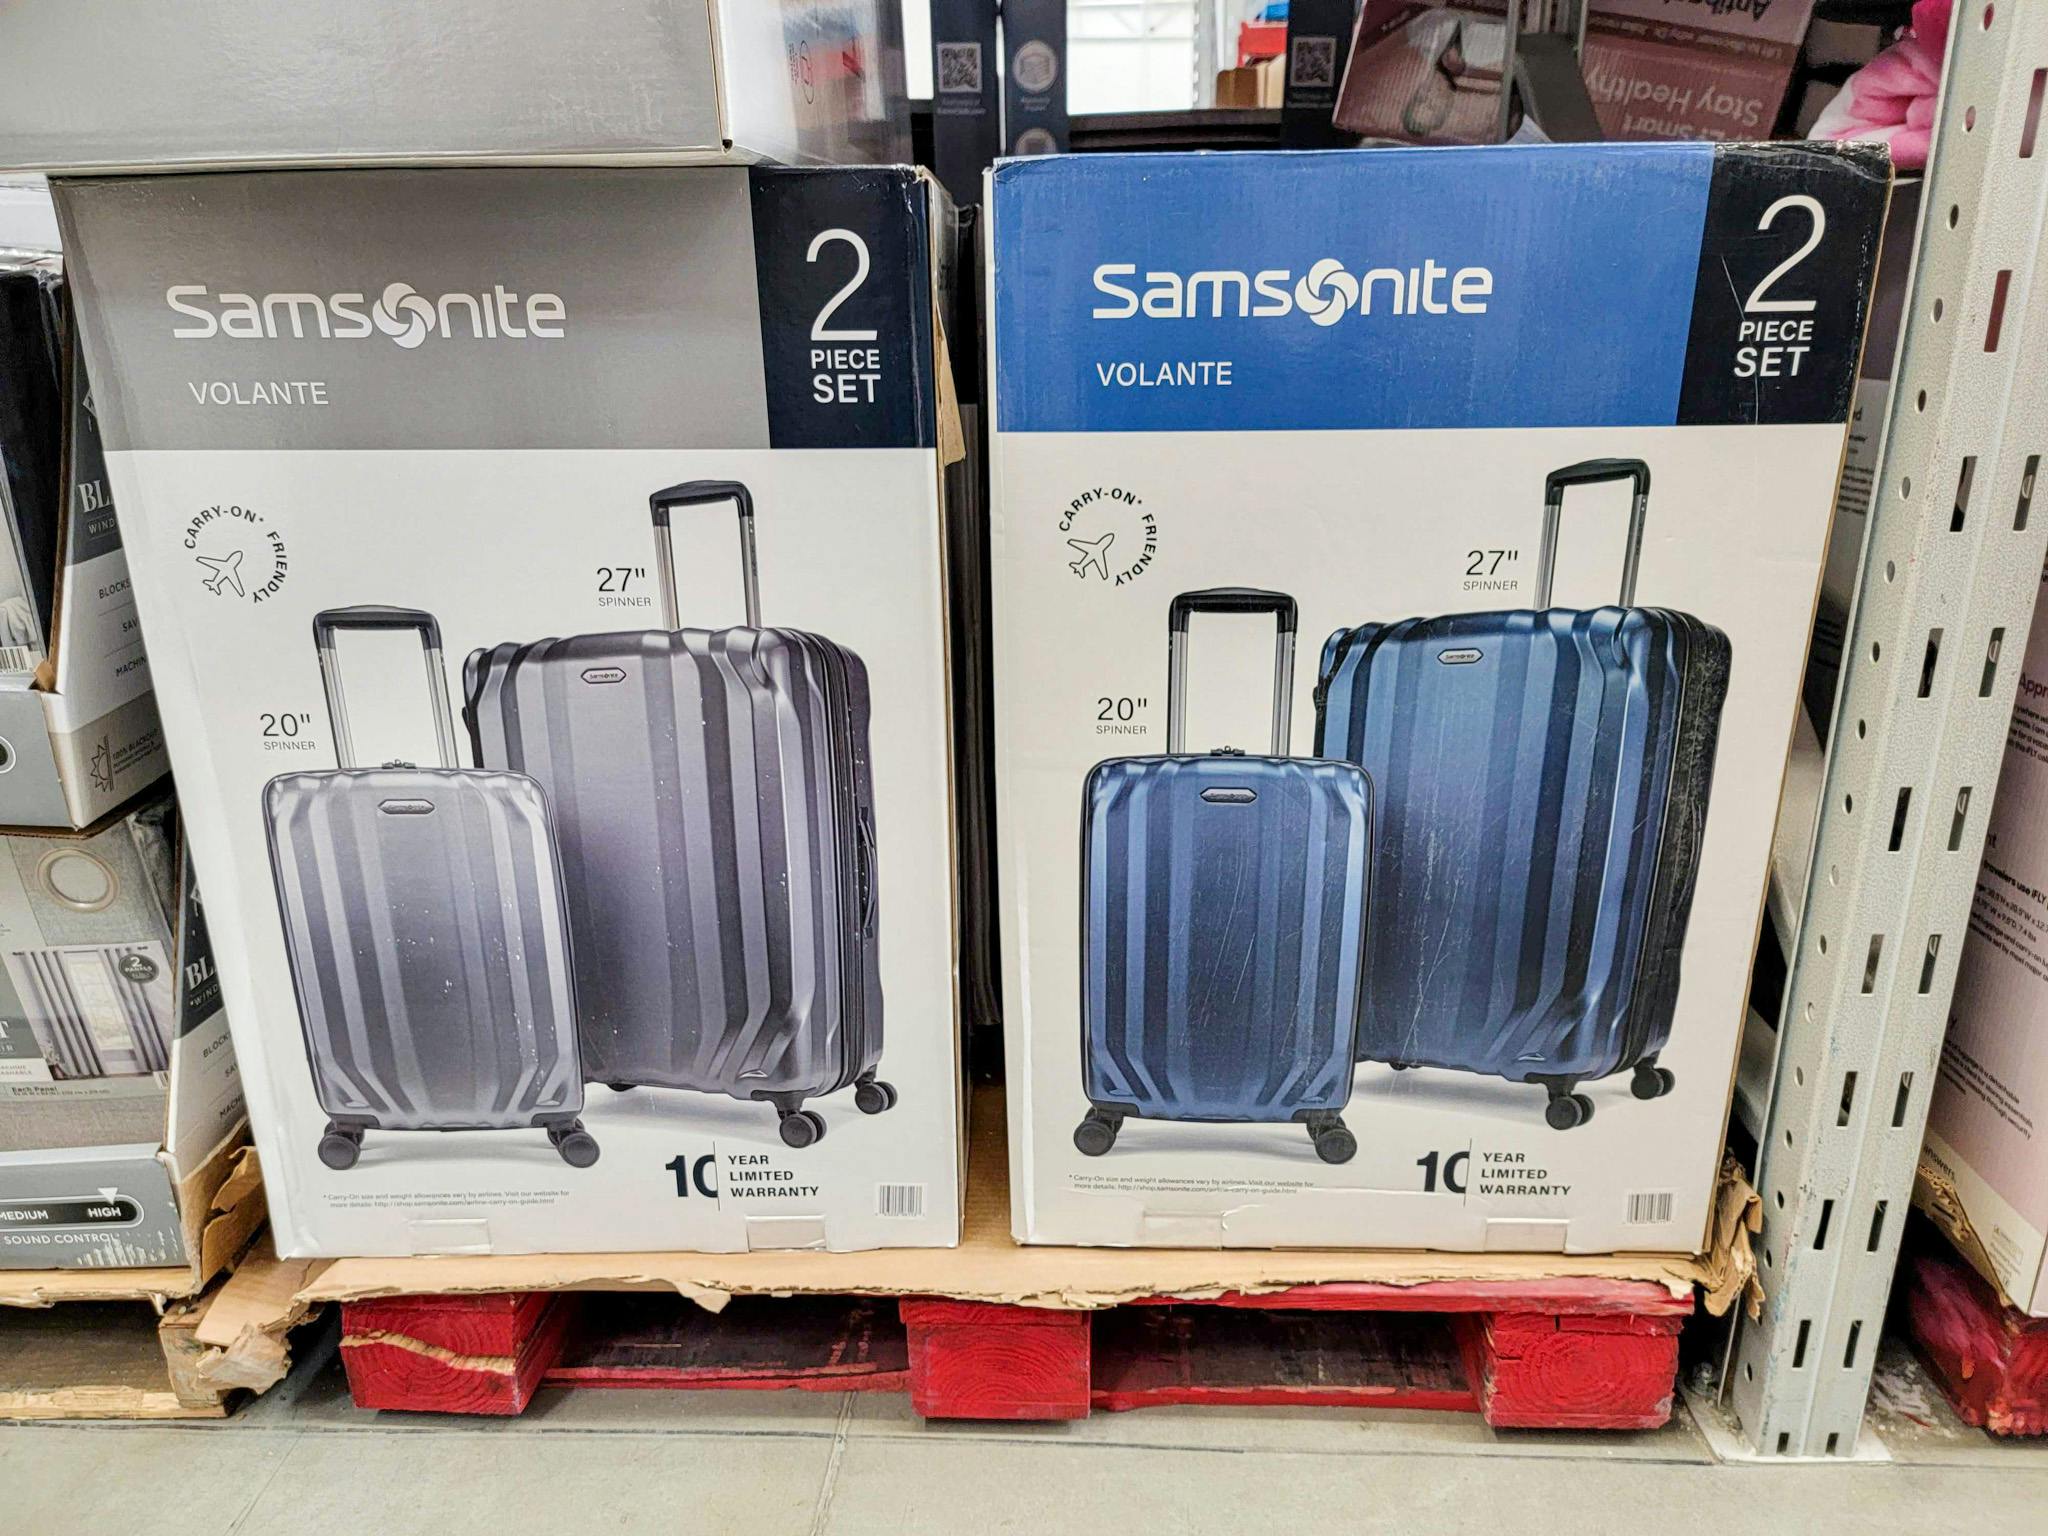 Allergisch Picknicken gebruik Samsonite Hardside Spinner Luggage Set, $159.98 at Sam's Club (Reg.  $189.98) - The Krazy Coupon Lady